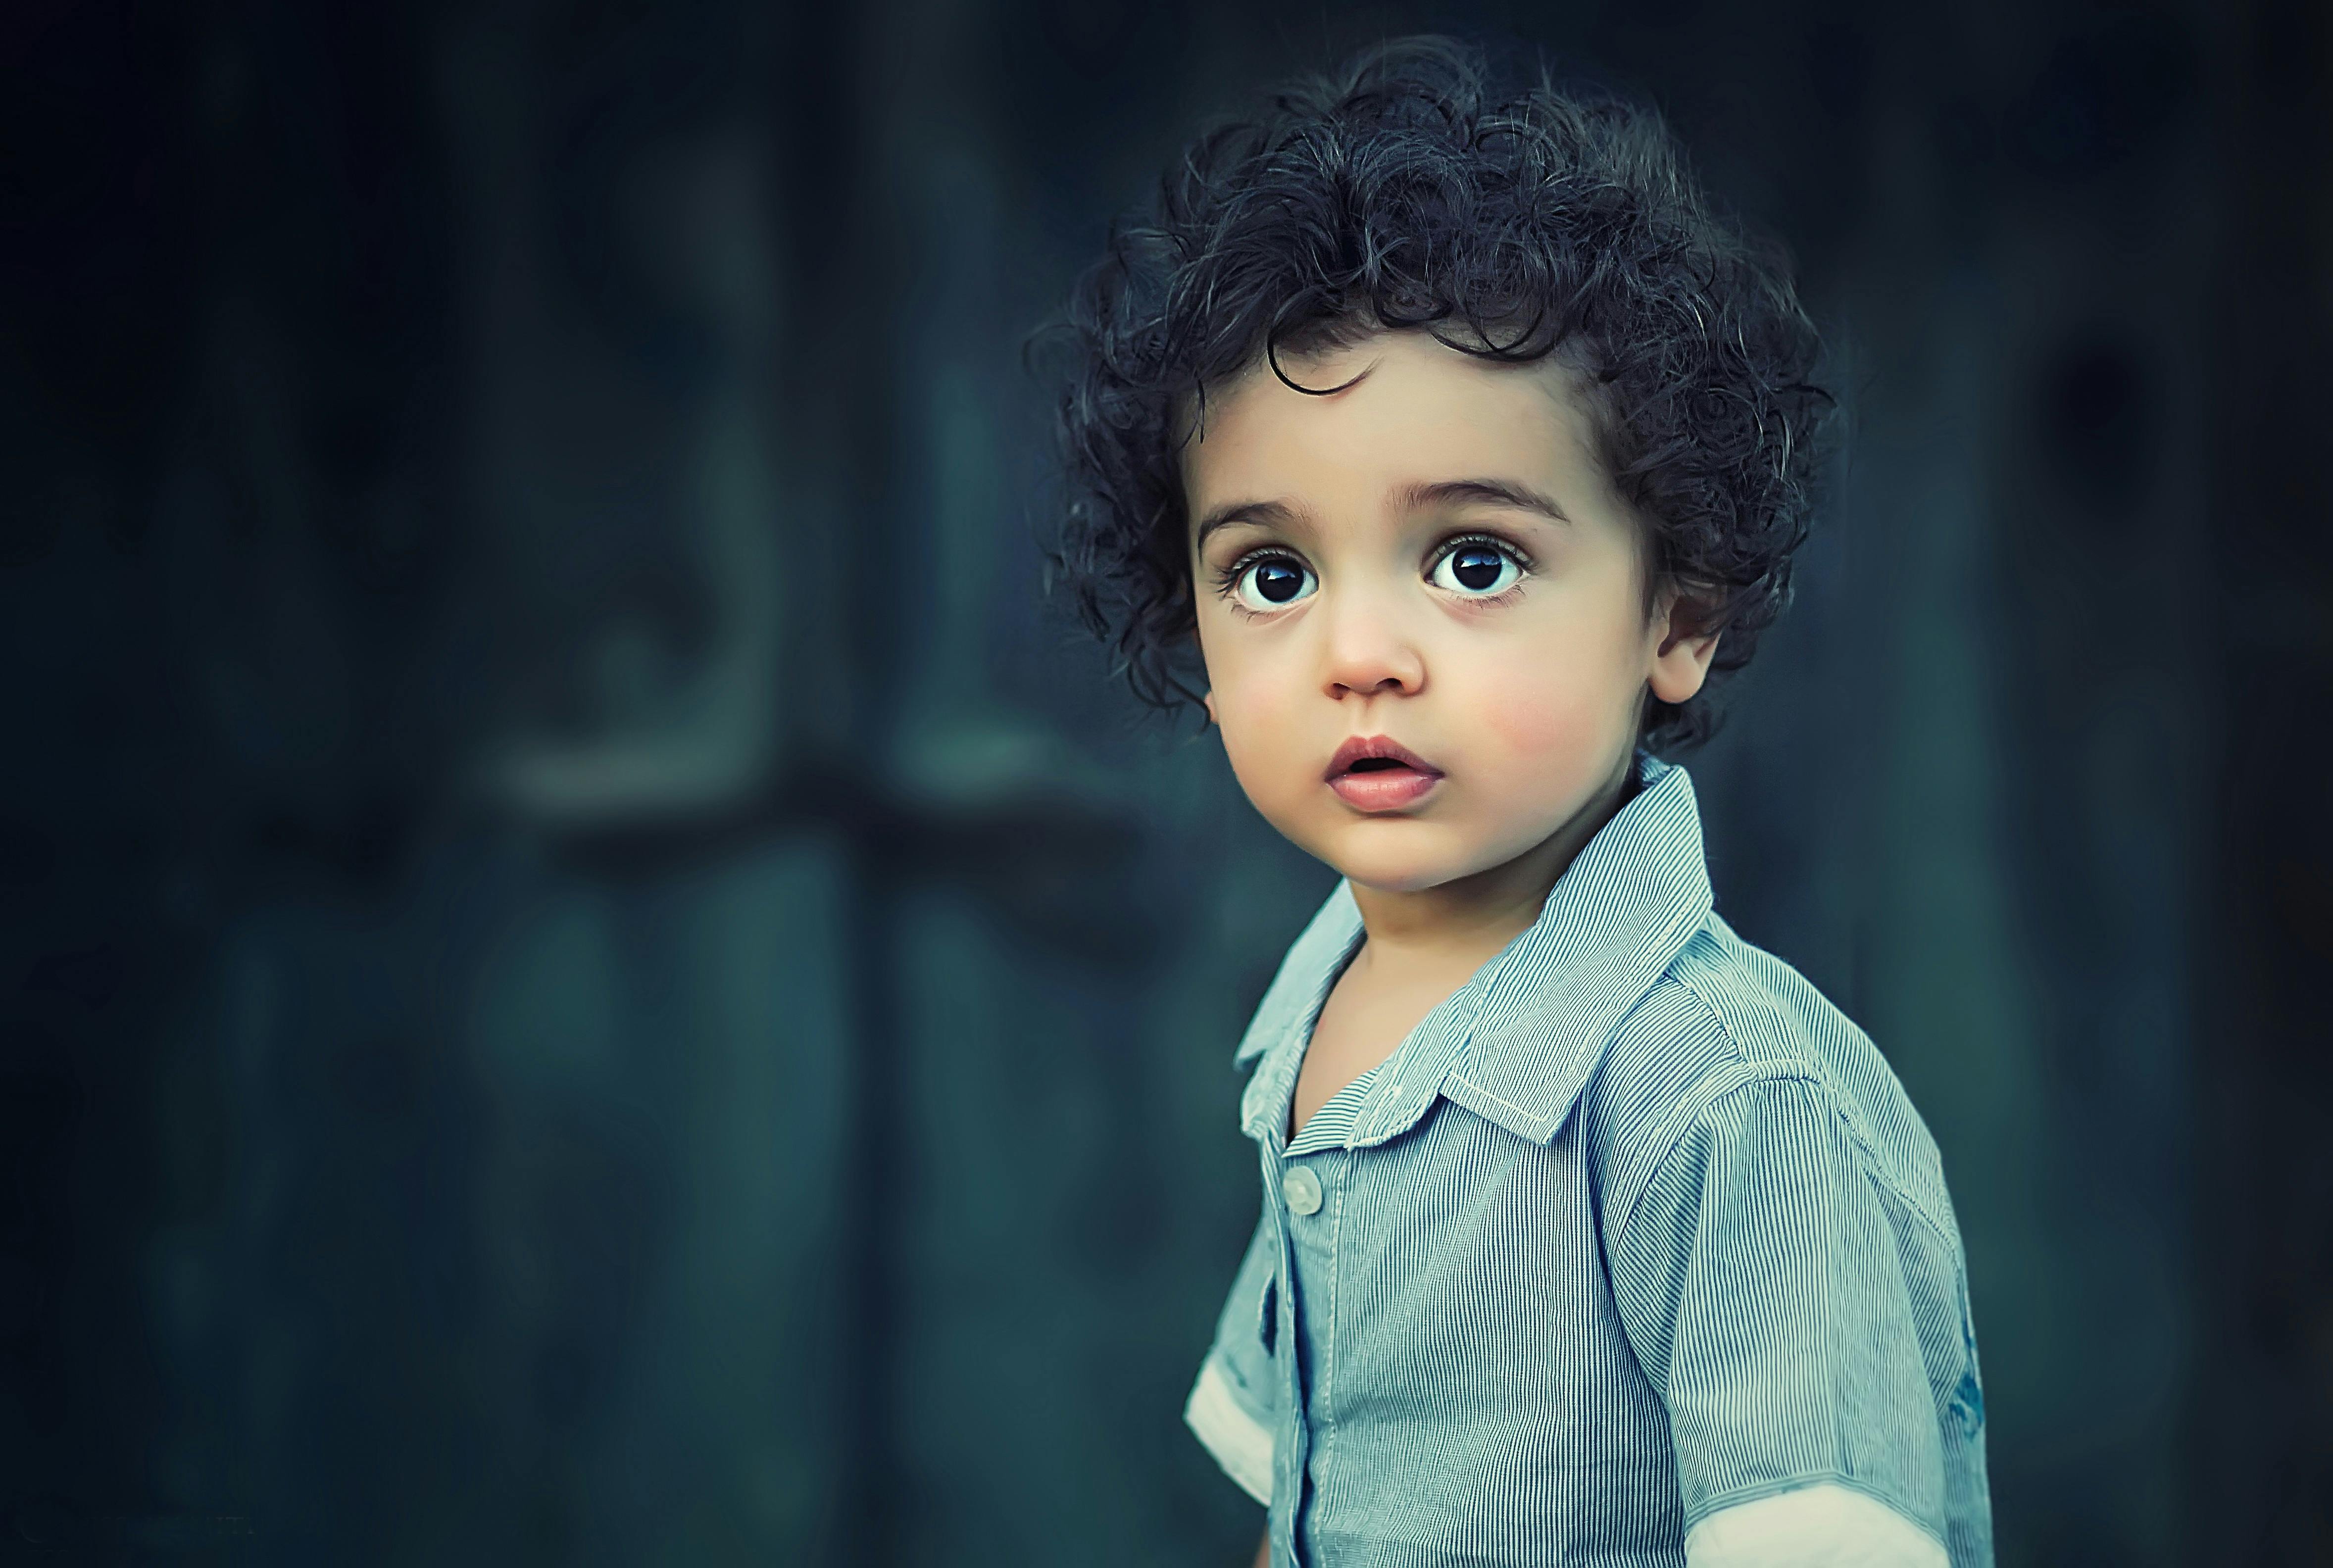 70,000+ Best Child Photos · 100% Free Download · Pexels Stock Photos